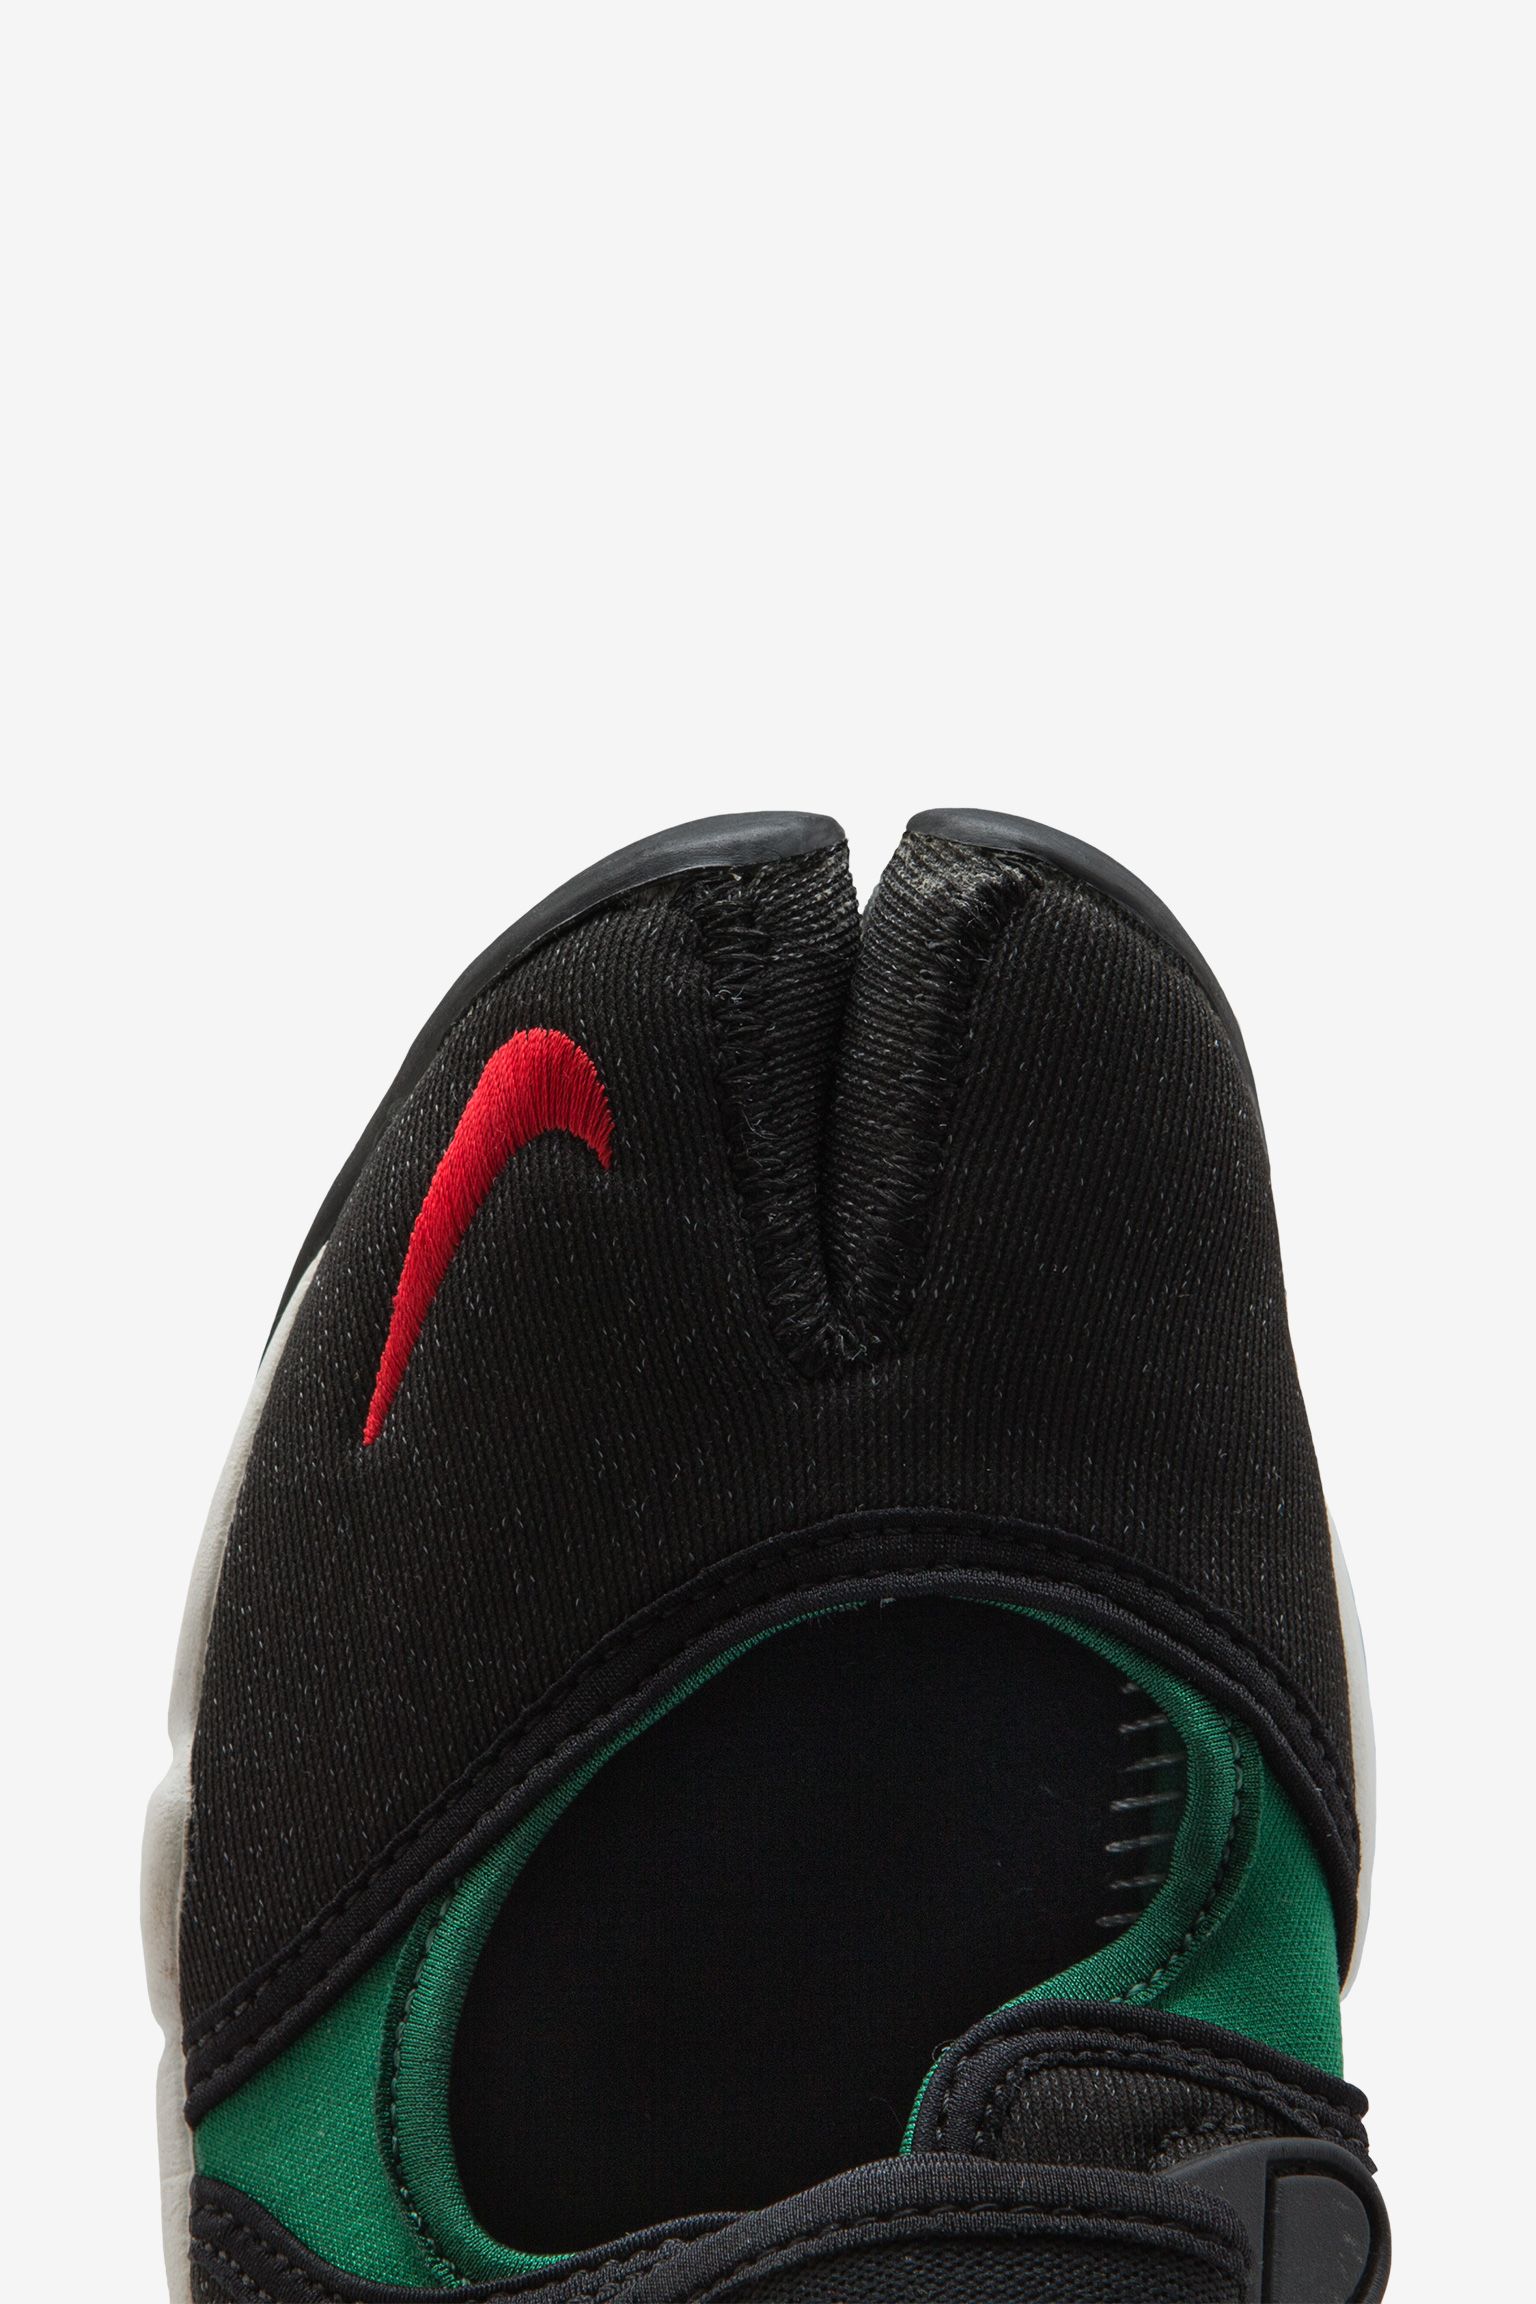 Detail Nike Ninja Turtle Shoes Nomer 13